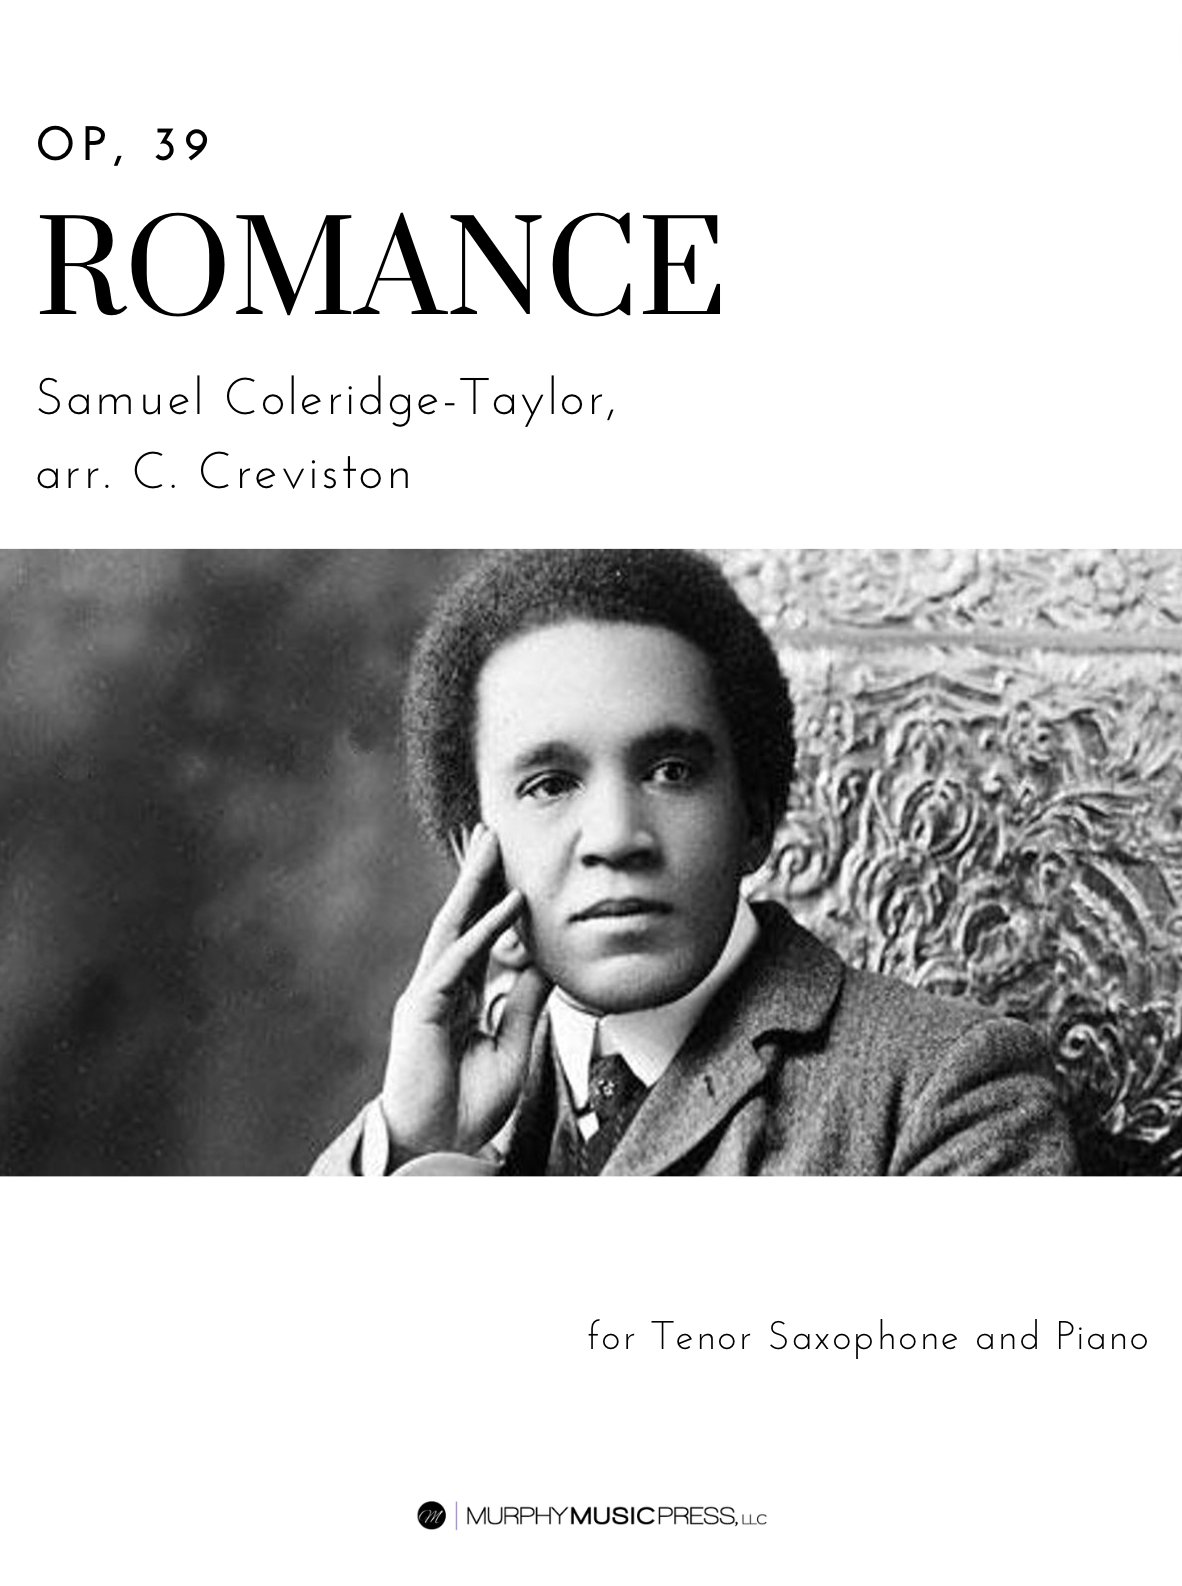 Romance, Op. 39 by Samuel Coleridge-Taylor, arr. Creviston 